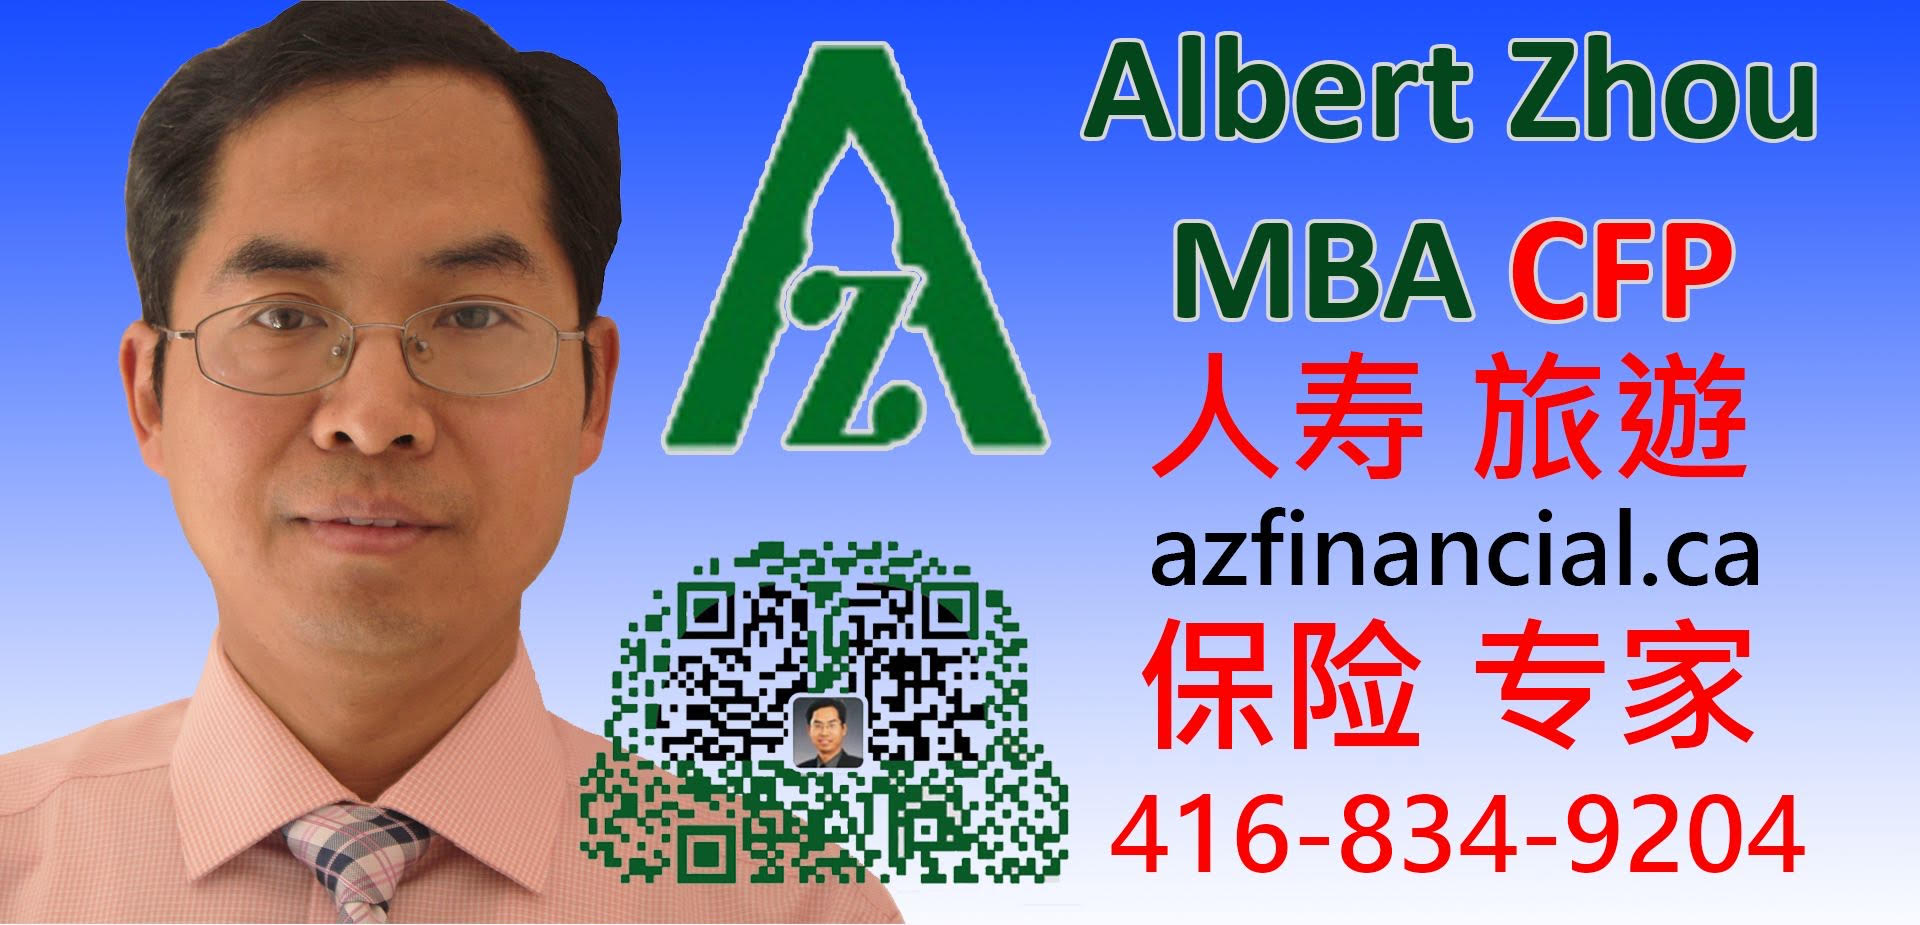 Insurance Service by Albert Zhou